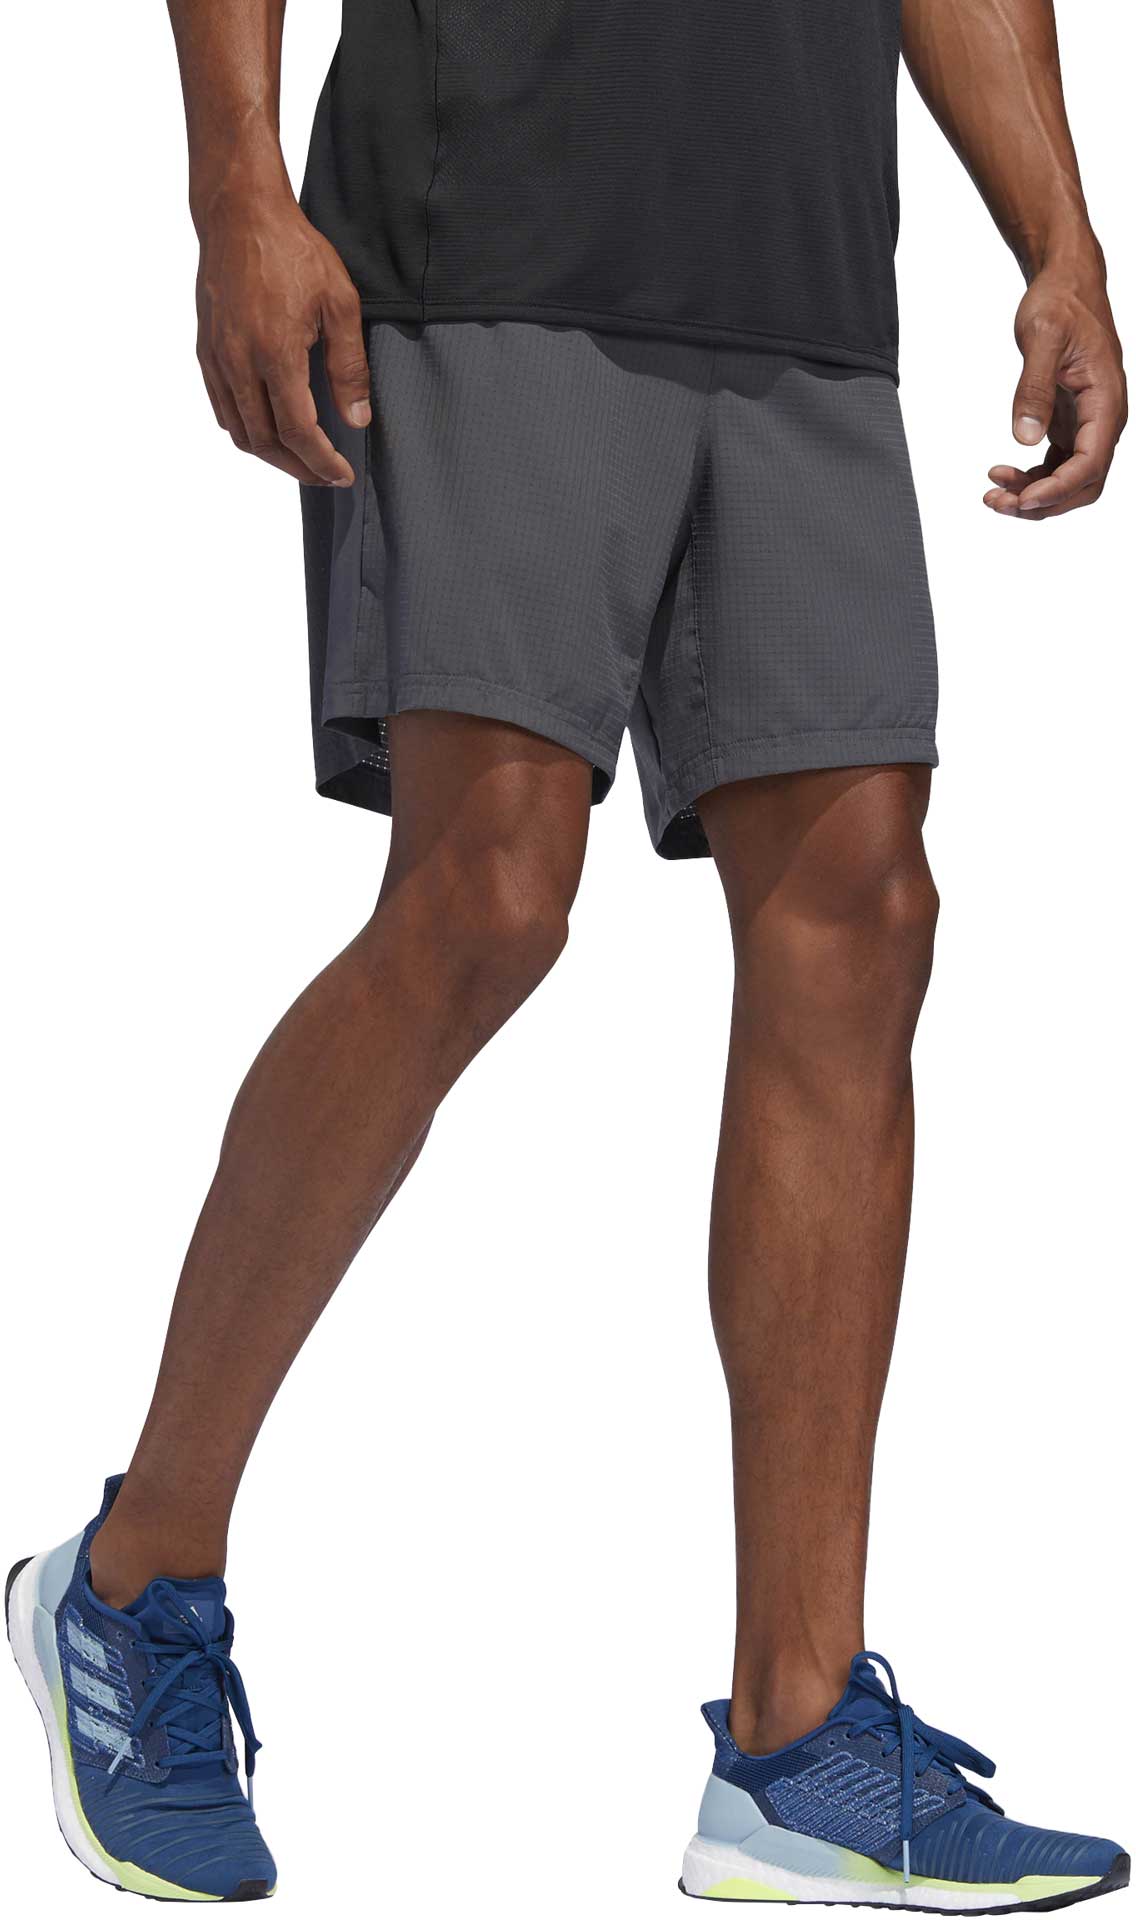 Men’s sports shorts